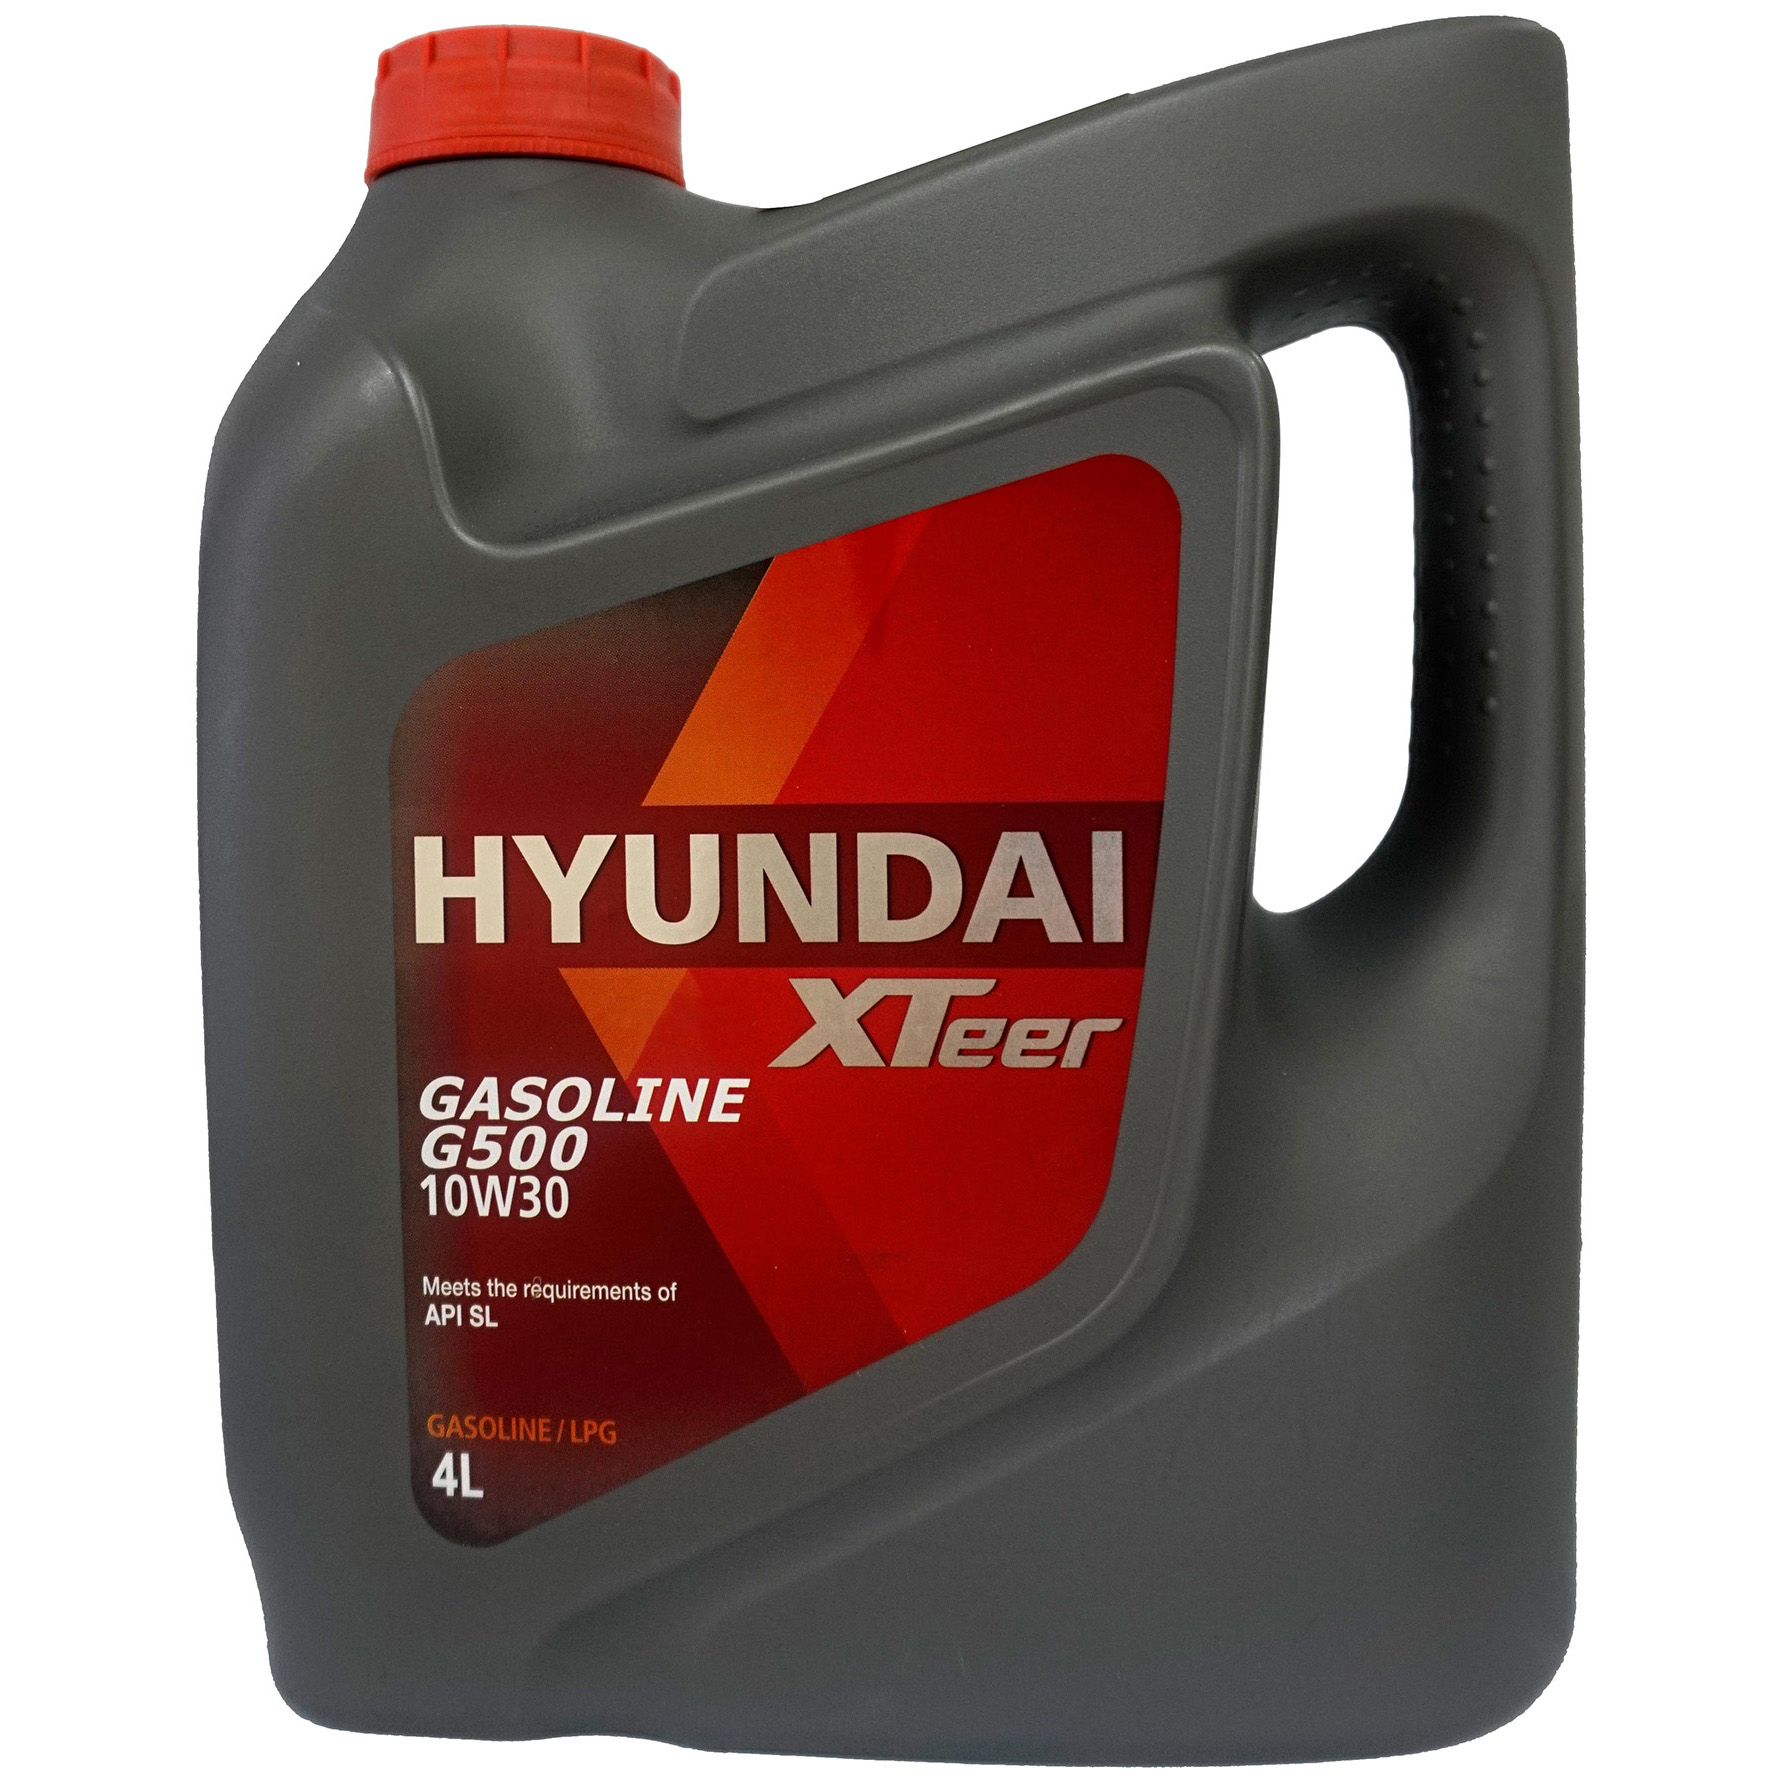 Hyundai xteer gasoline. Hyundai-XTEER масло моторное gasoline g500 10w30 SL 4 Л. Hyundai XTEER 5w30 4л. Hyundai XTEER 10w30. 1041135 Hyundai XTEER.